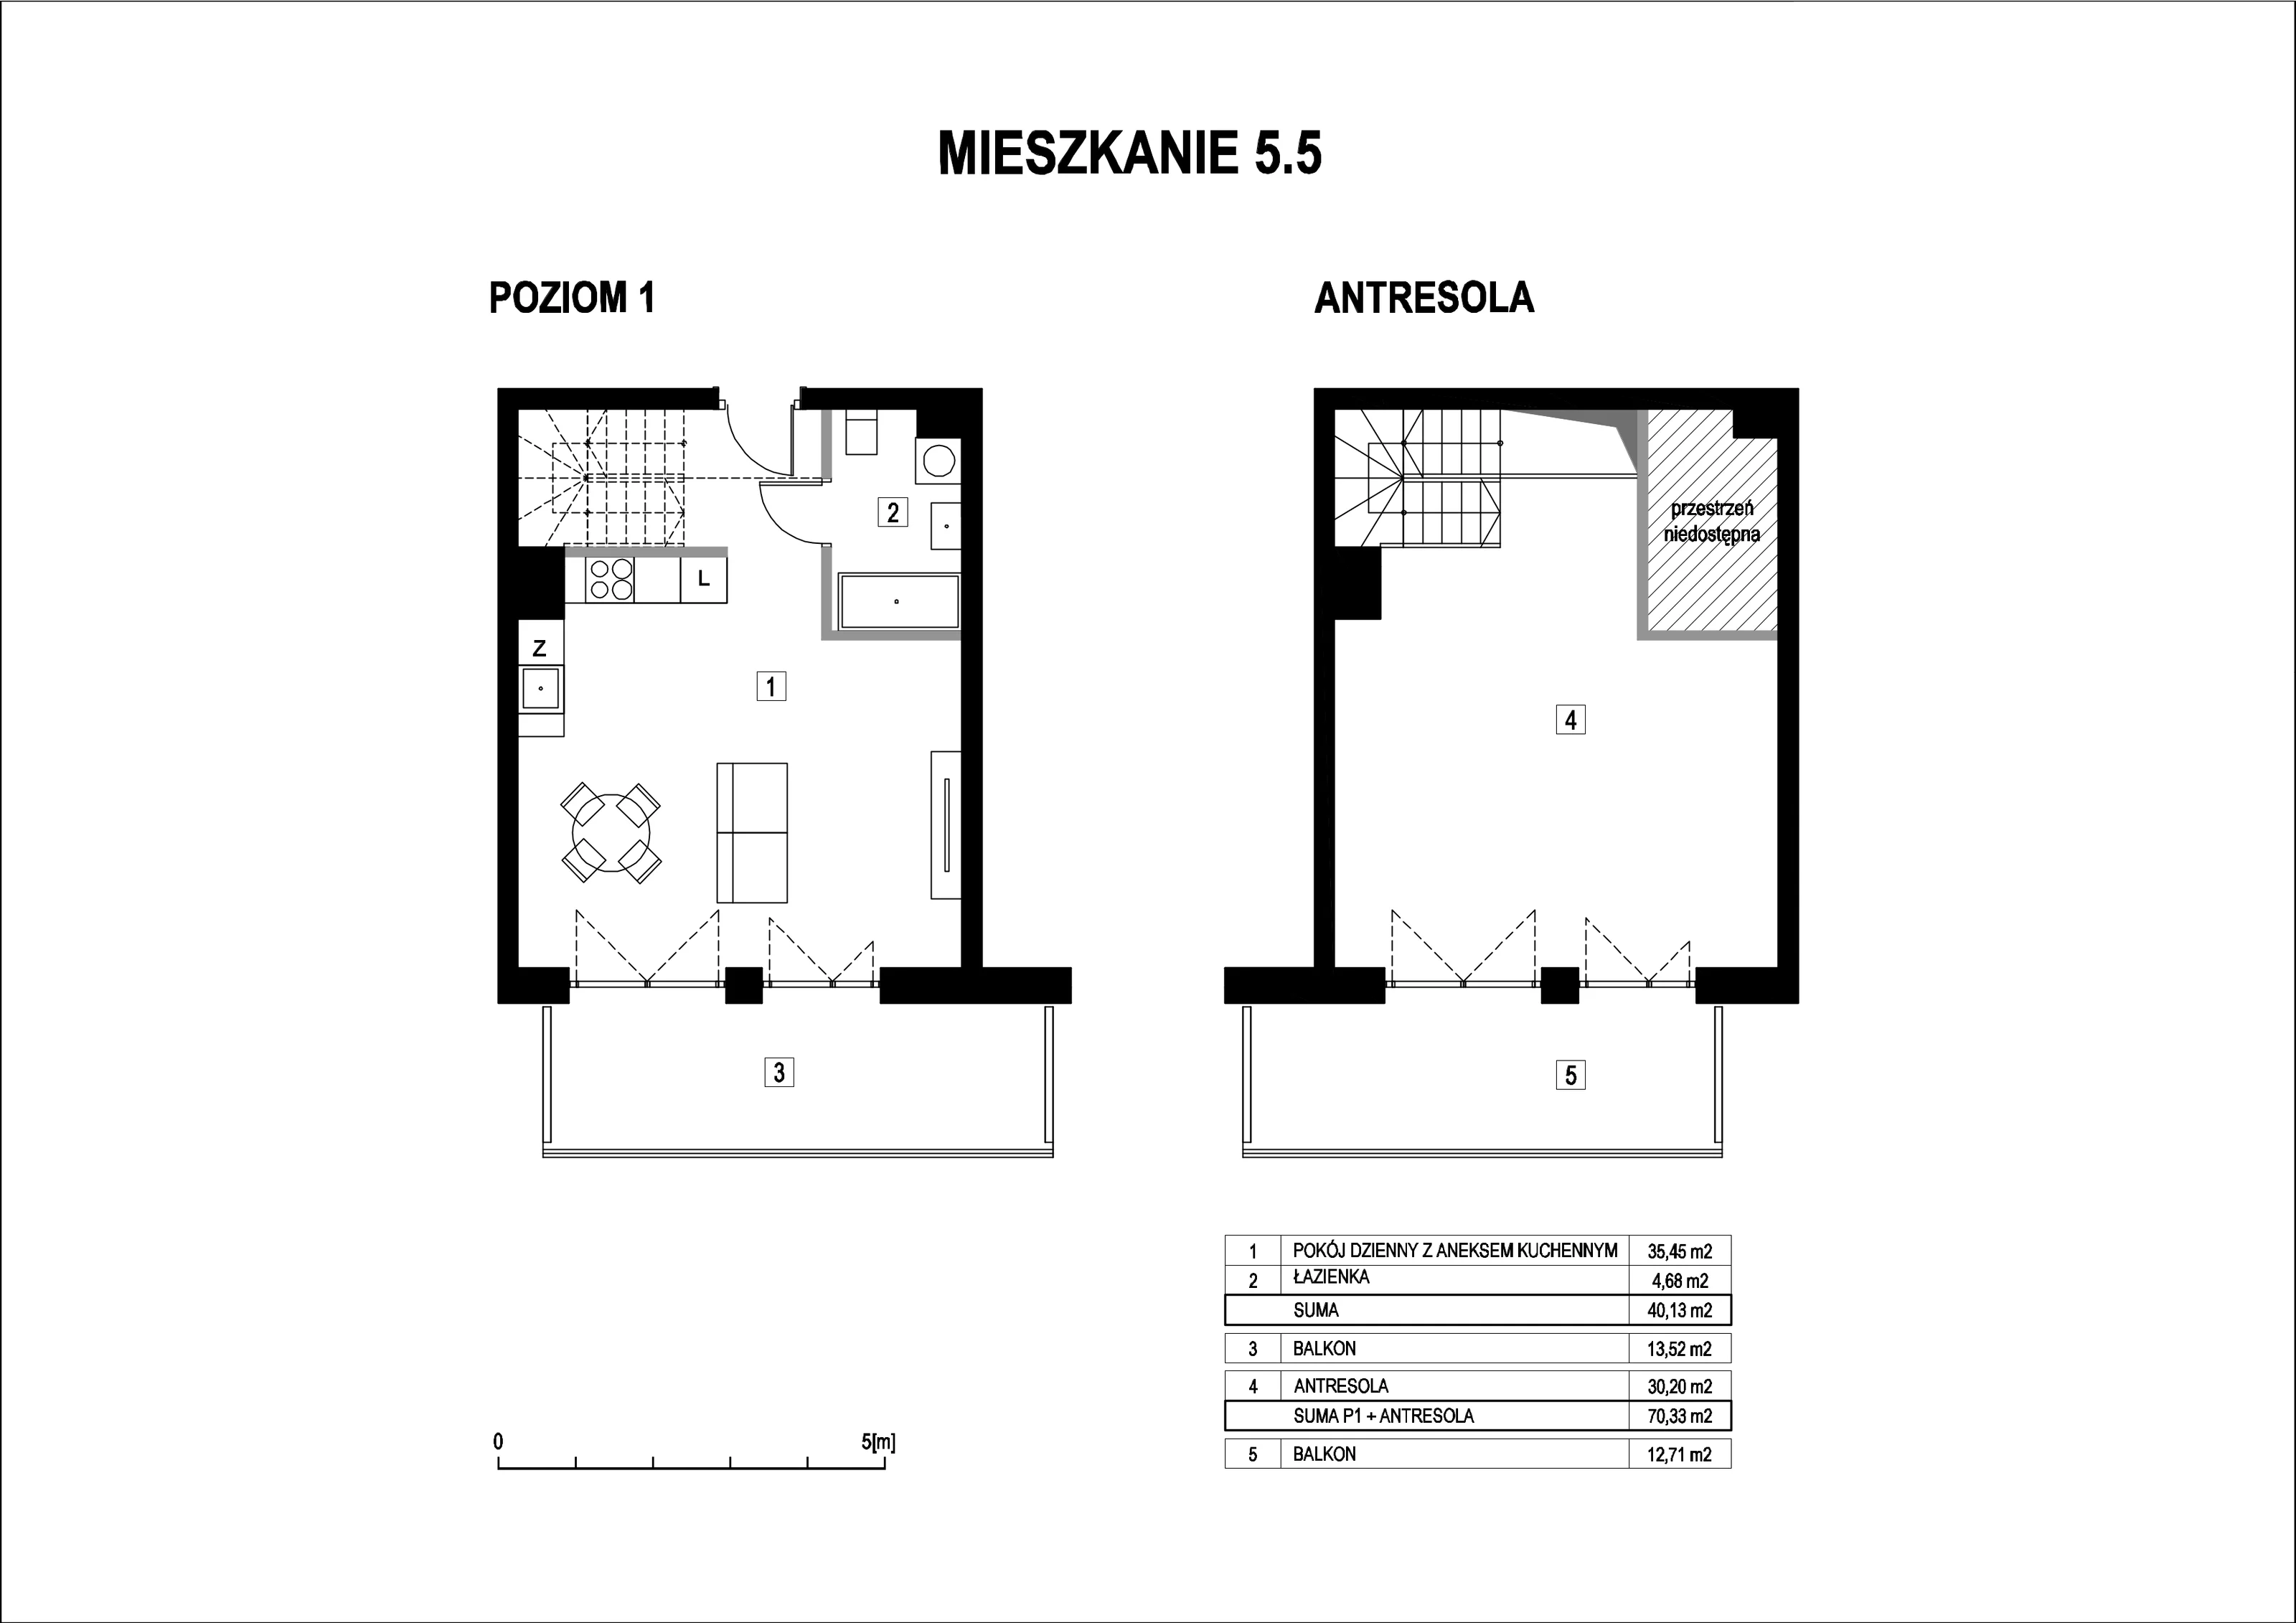 Mieszkanie 70,33 m², piętro 5, oferta nr M5_5, La Vie Art, Łódź, Polesie, ul. 6 Sierpnia 10